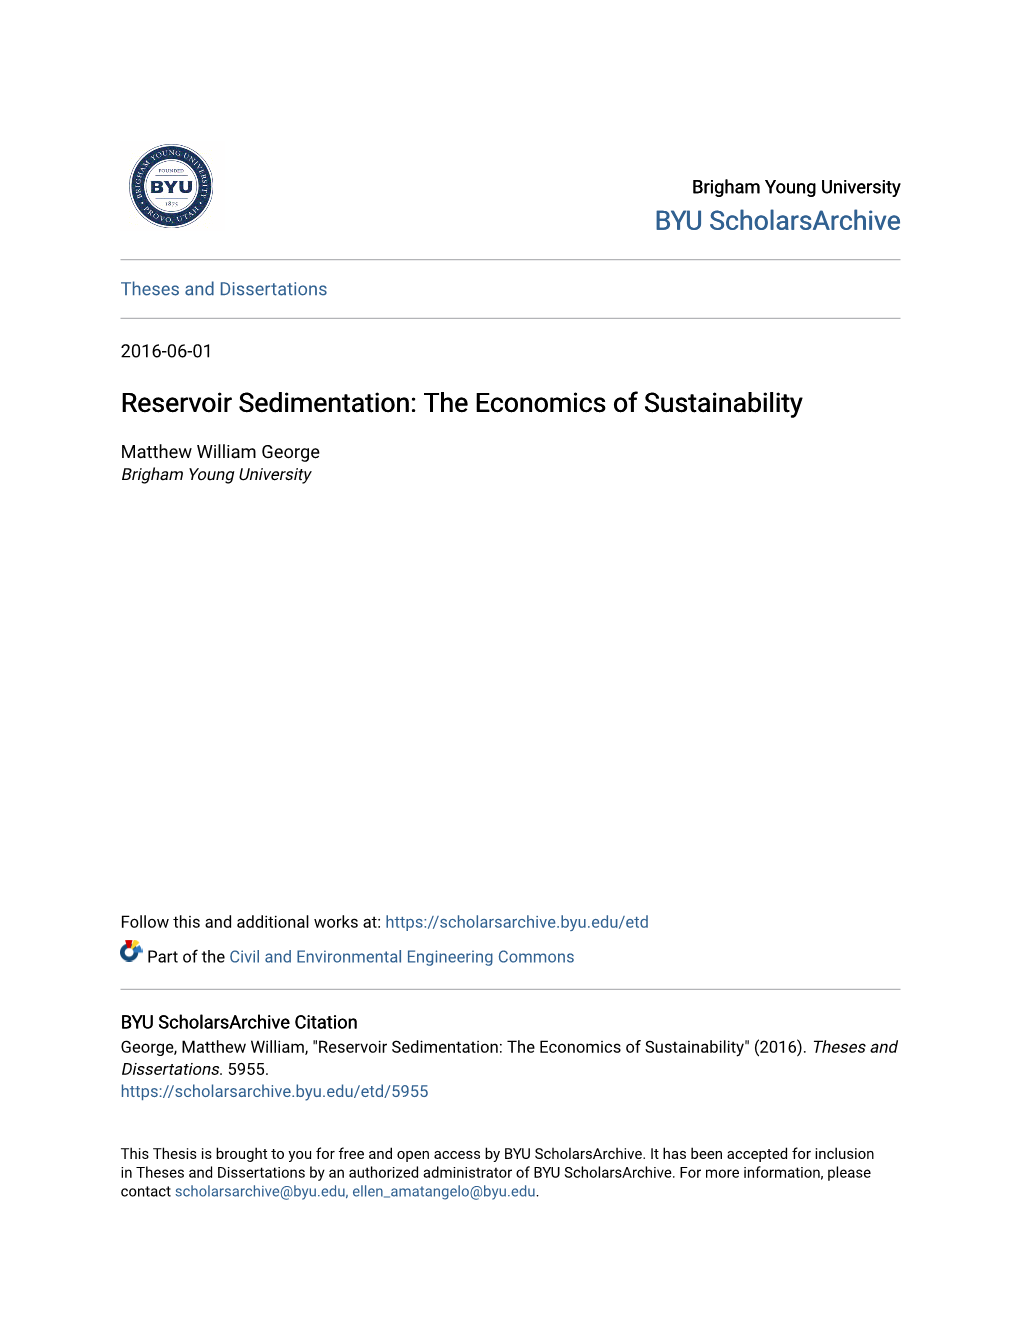 Reservoir Sedimentation: the Economics of Sustainability